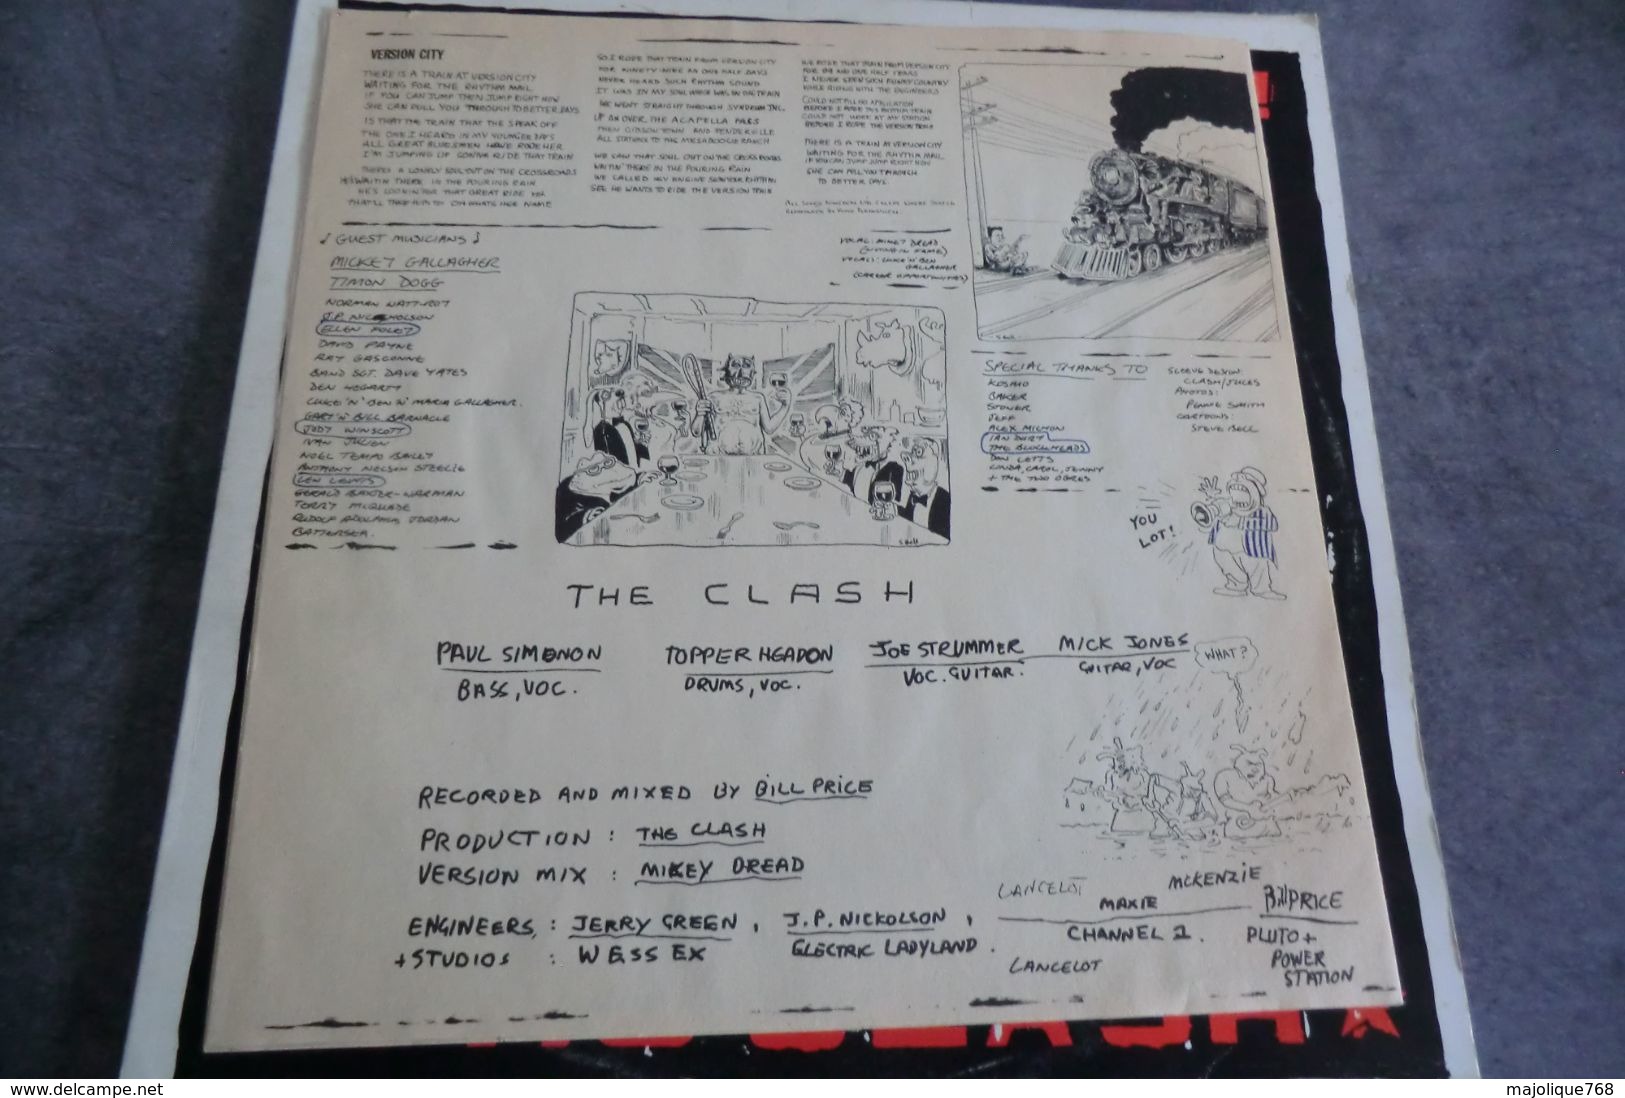 disque - The Clash - Sandinista ! - CBS FSN 1 - 1980 - UK -